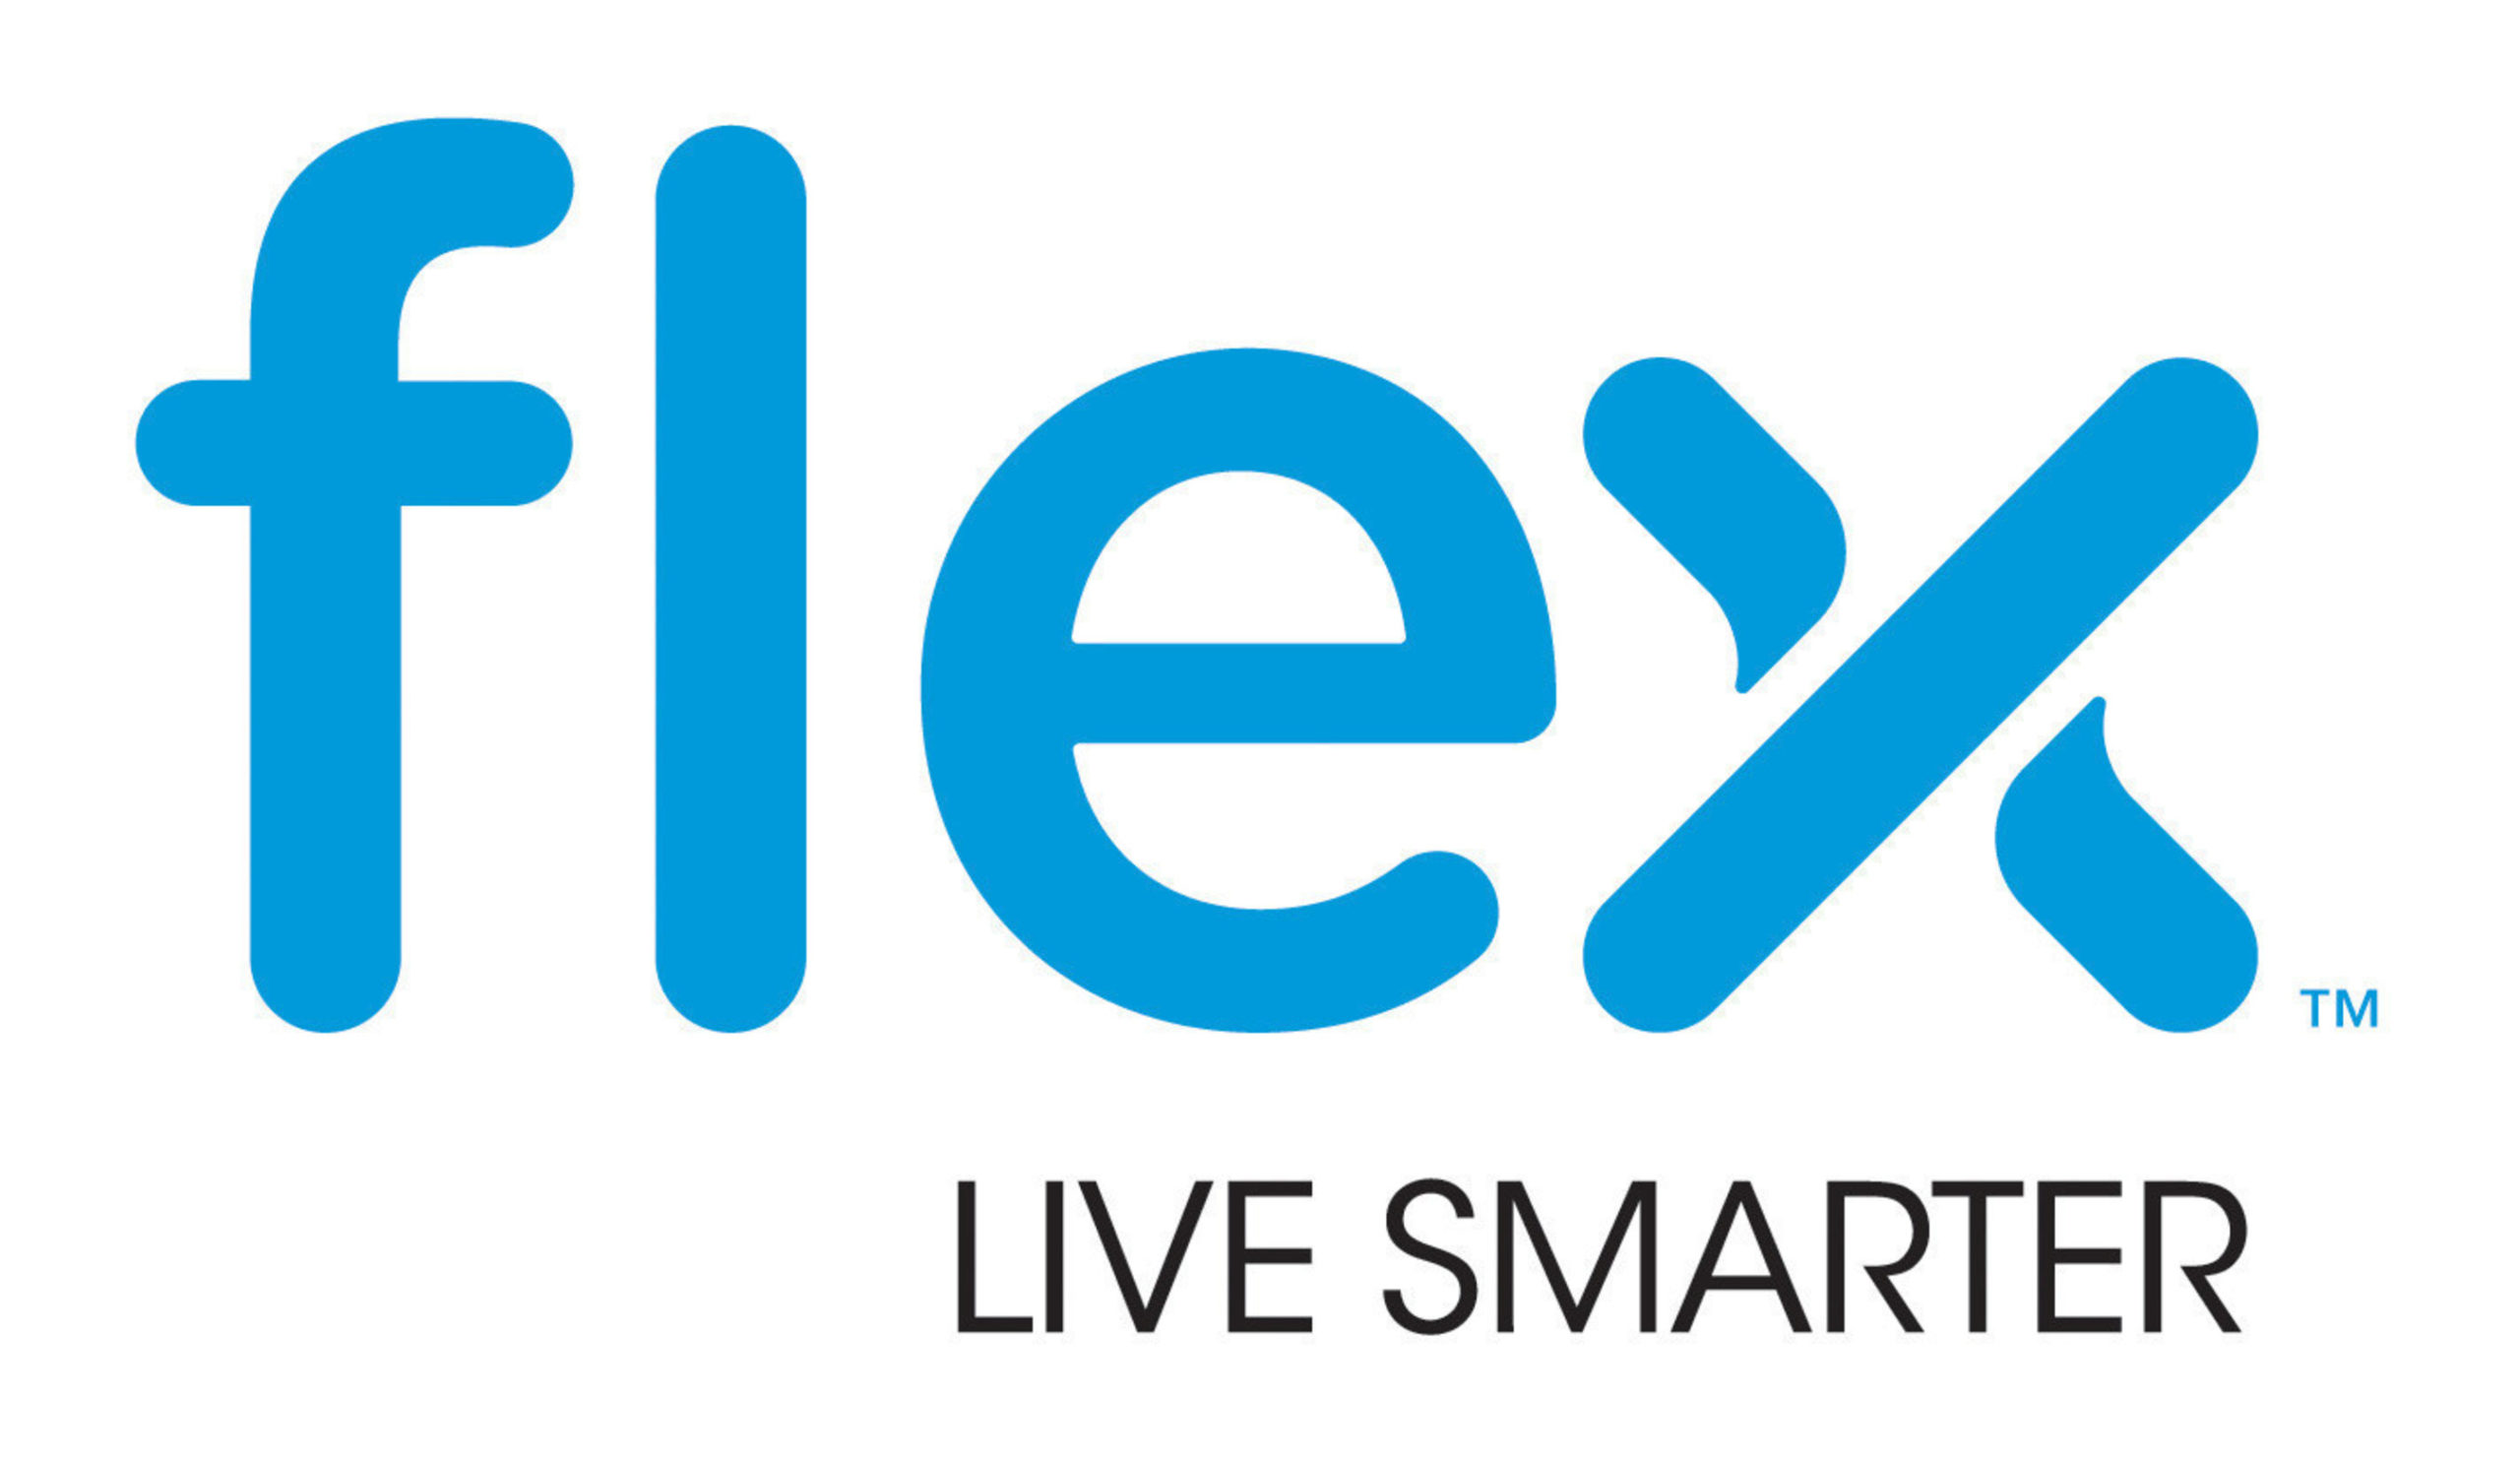 Flex Releases 2020 Sustainability Report Highlighting Key Performance Metrics